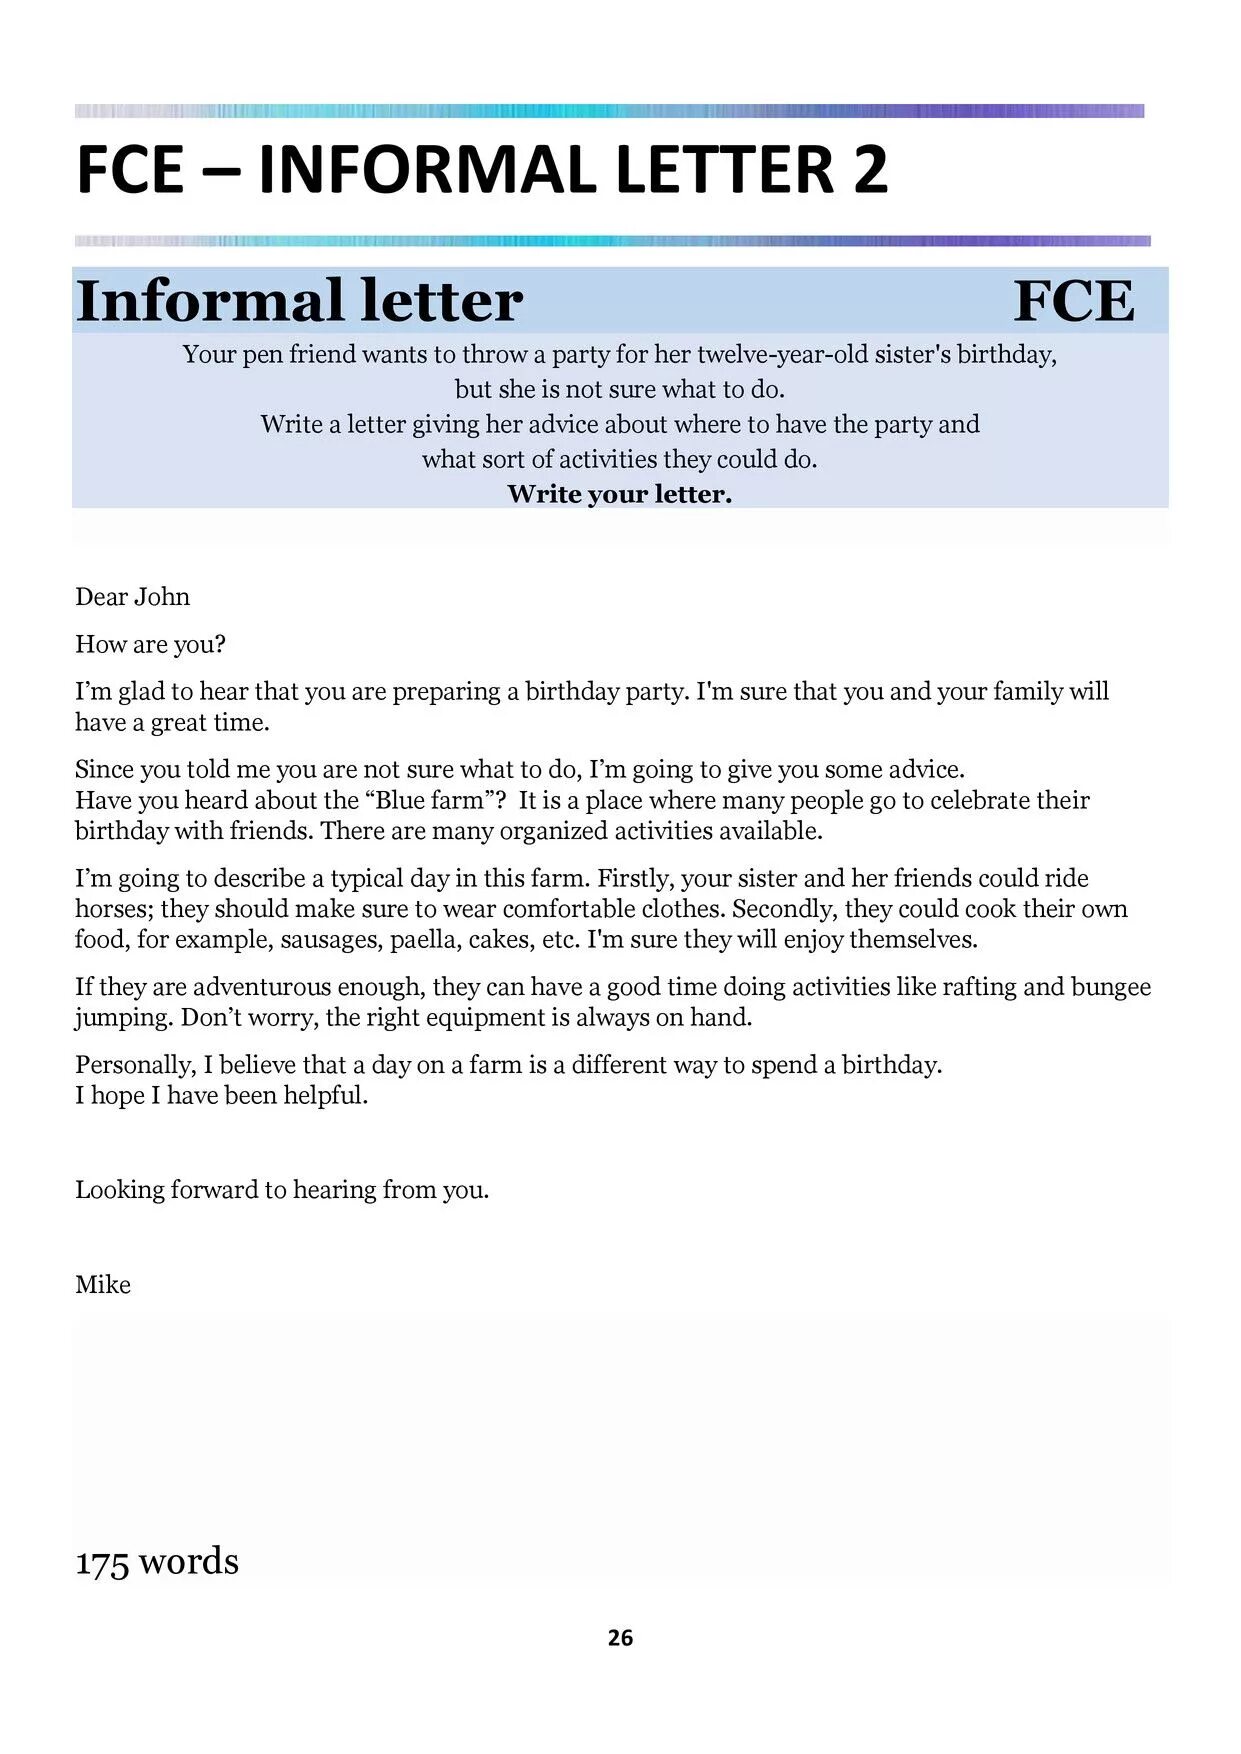 Letters пример. Informal Letter FCE example. Письмо FCE. Письмо FCE пример. FCE Letter example.